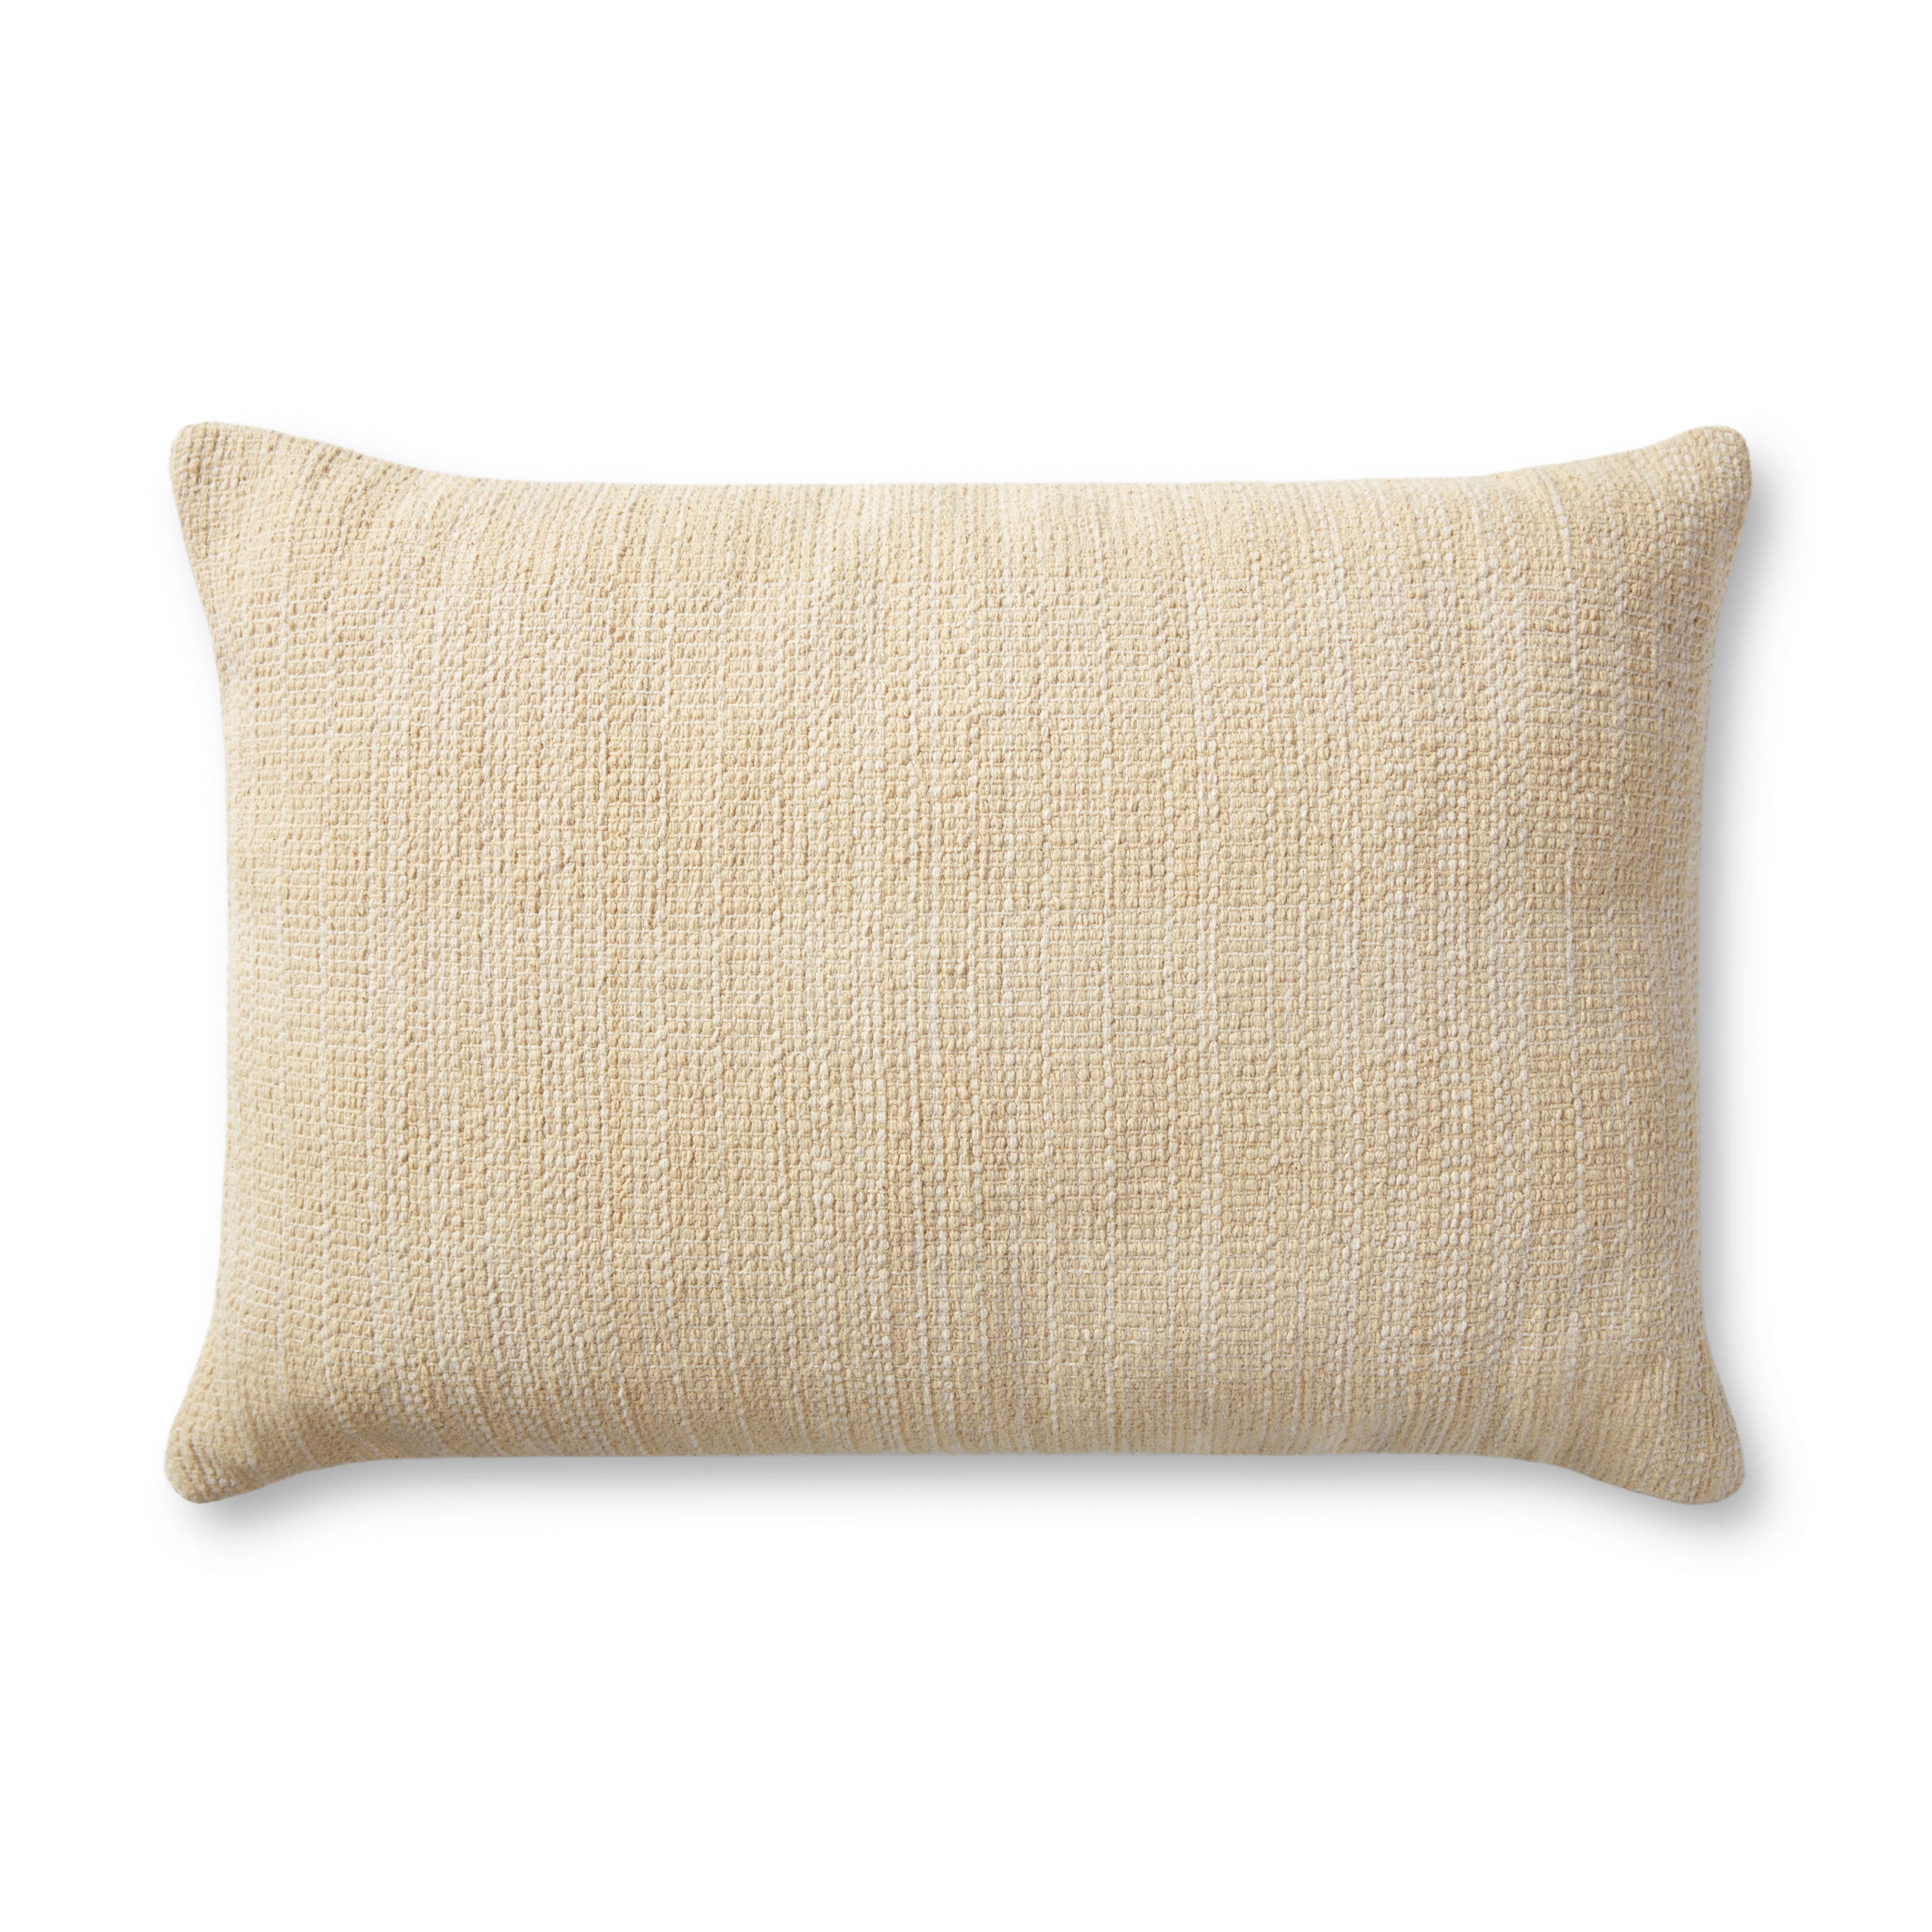 P0339 Loloi Pillows Pillow